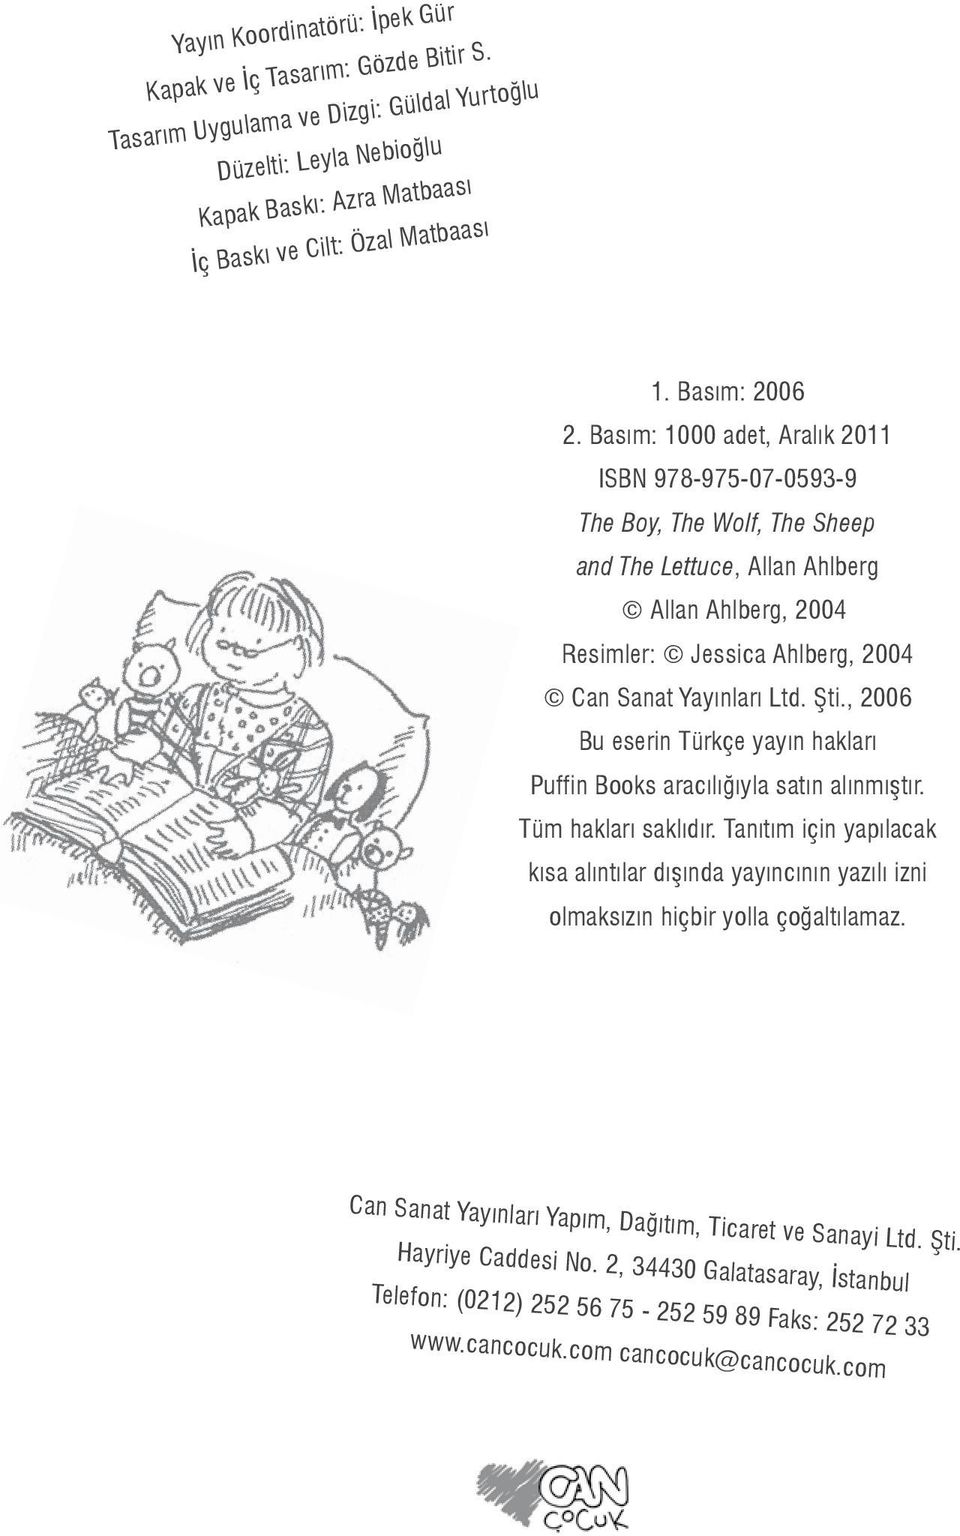 Basım: 1000 adet, Aralık 2011 ISBN 978-975-07-0593-9 The Boy, The Wolf, The Sheep and The Lettuce, Allan Ahlberg Allan Ahlberg, 2004 Resimler: Jessica Ahlberg, 2004 Can Sanat Yayınları Ltd. Şti.